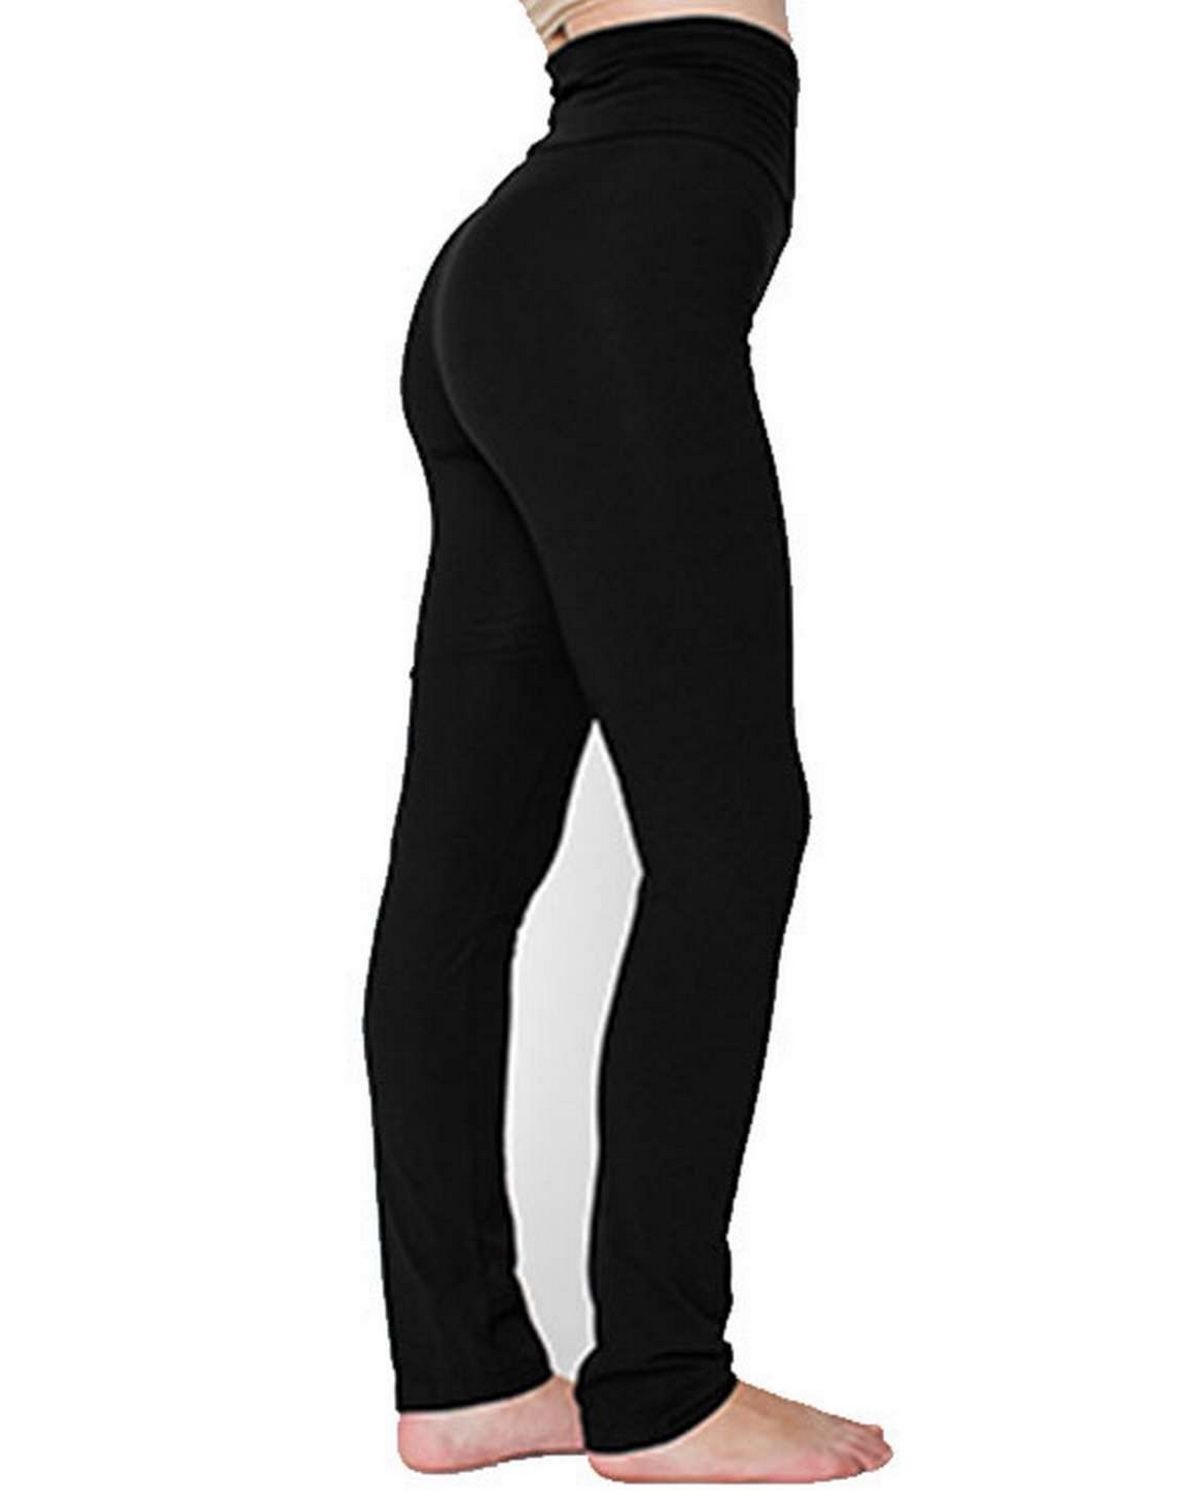 American Apparel 8375W Ladies Cotton/Spandex Yoga Pant